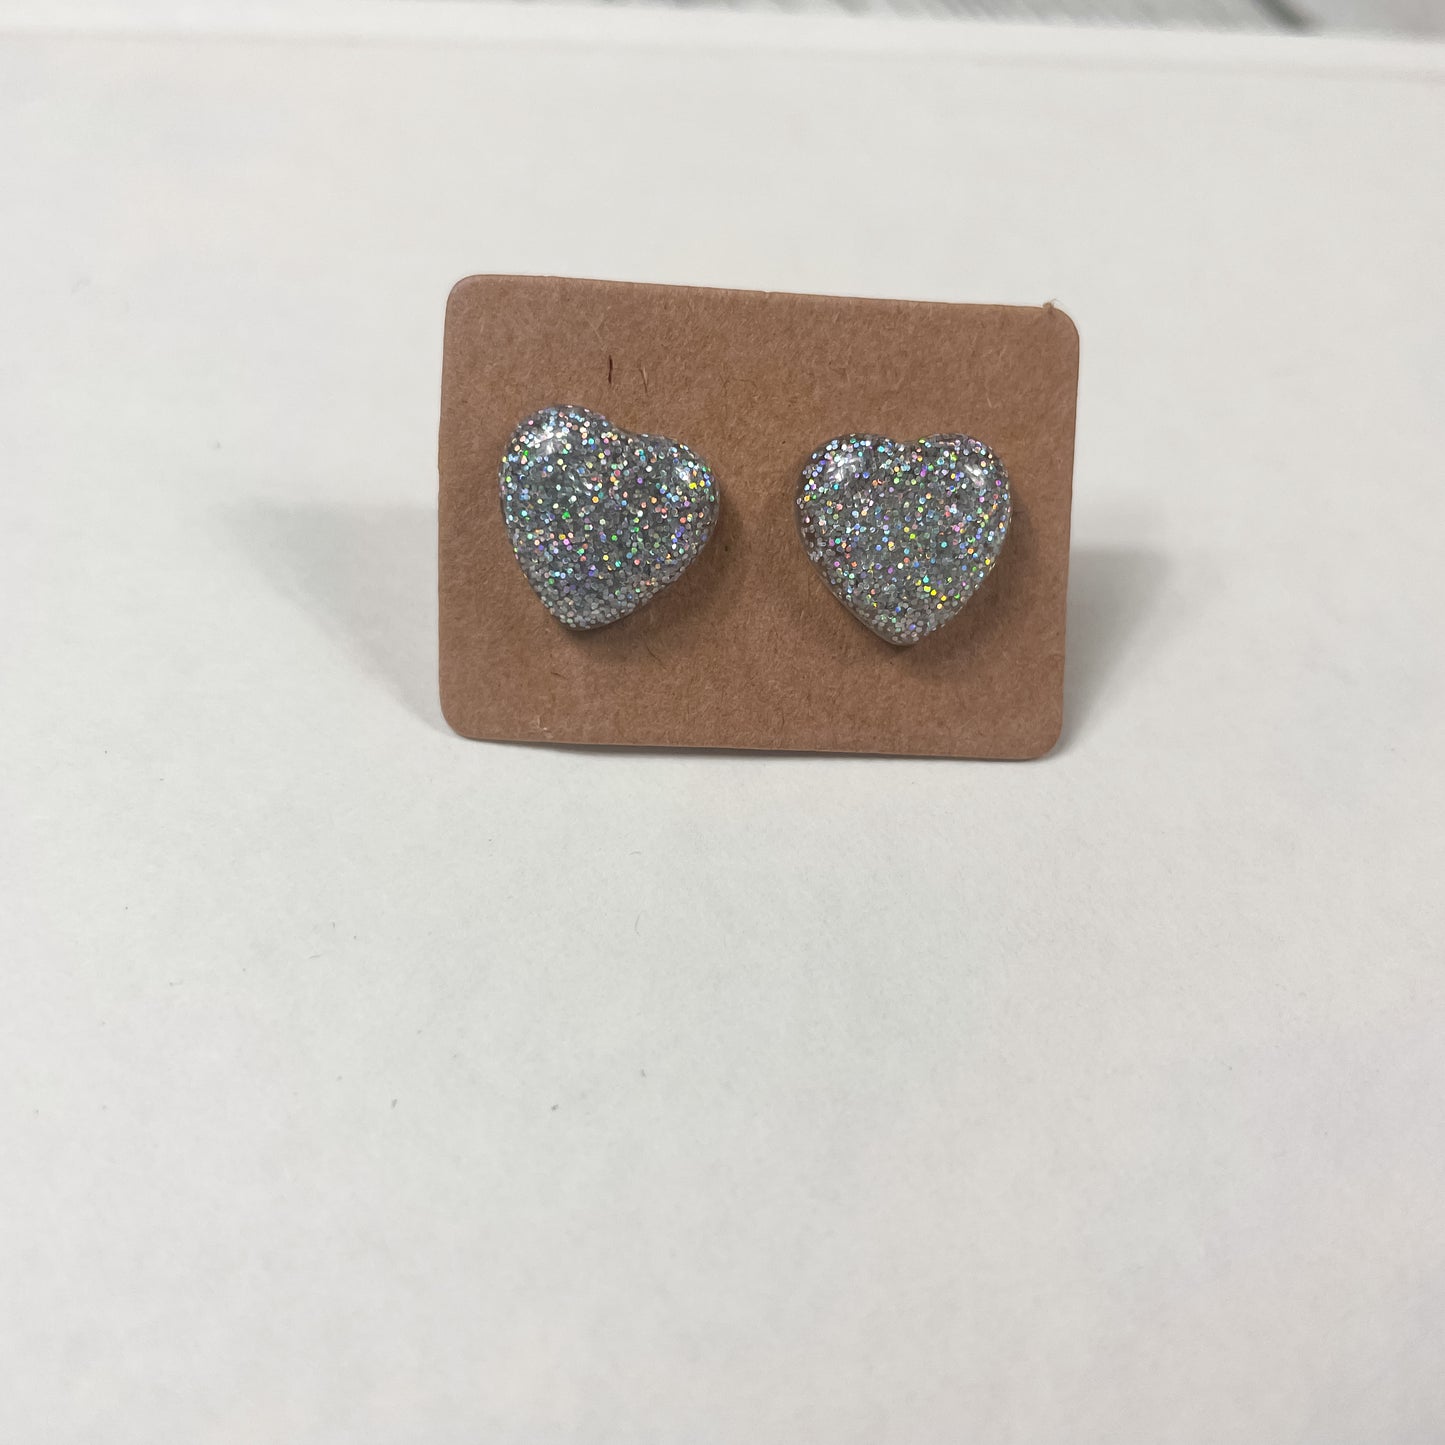 Holographic Silver Glitter Amoris Style Earrings | Heart Shaped Stud Earrings